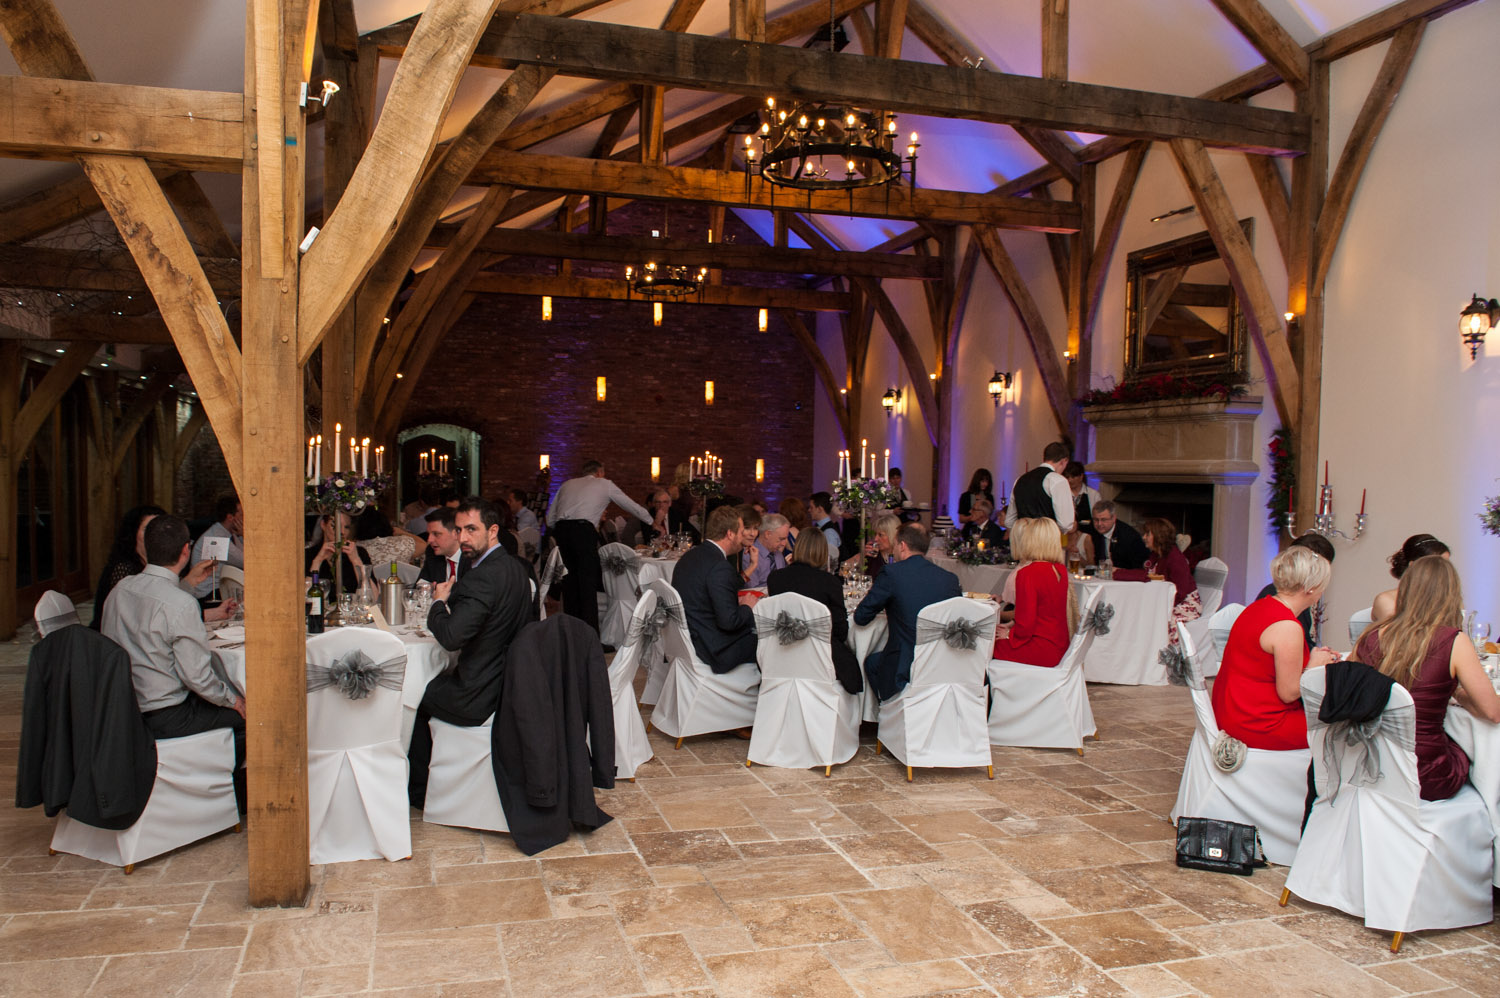 The great hall at Swancar Farm winter wedding